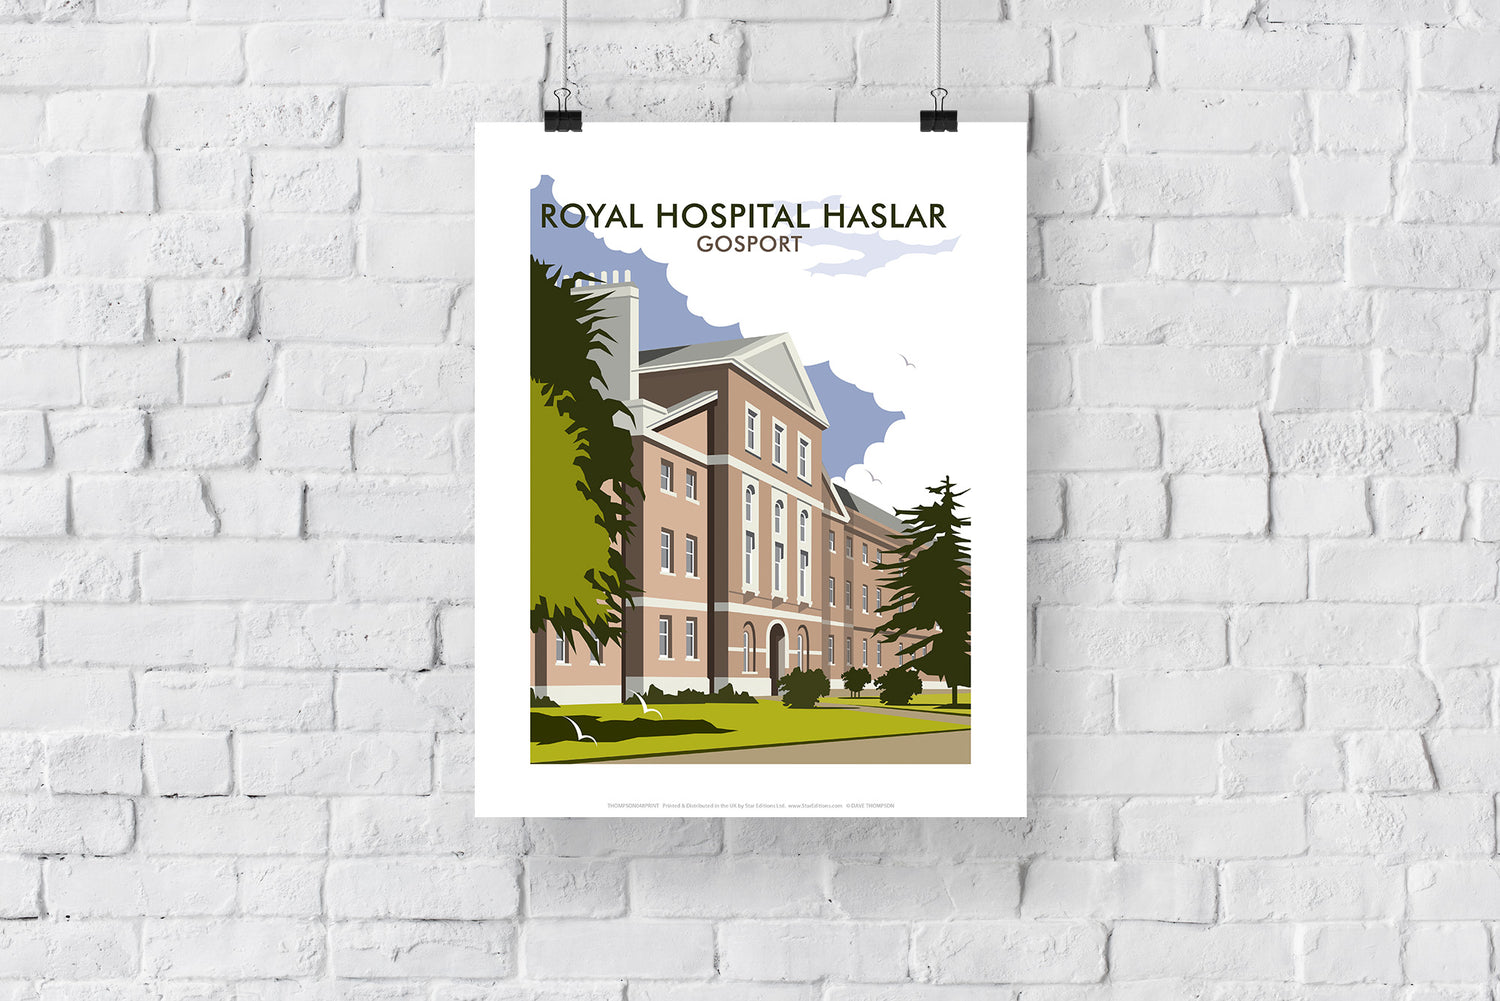 Royal Hospital Haslar, Gosport - Art Print